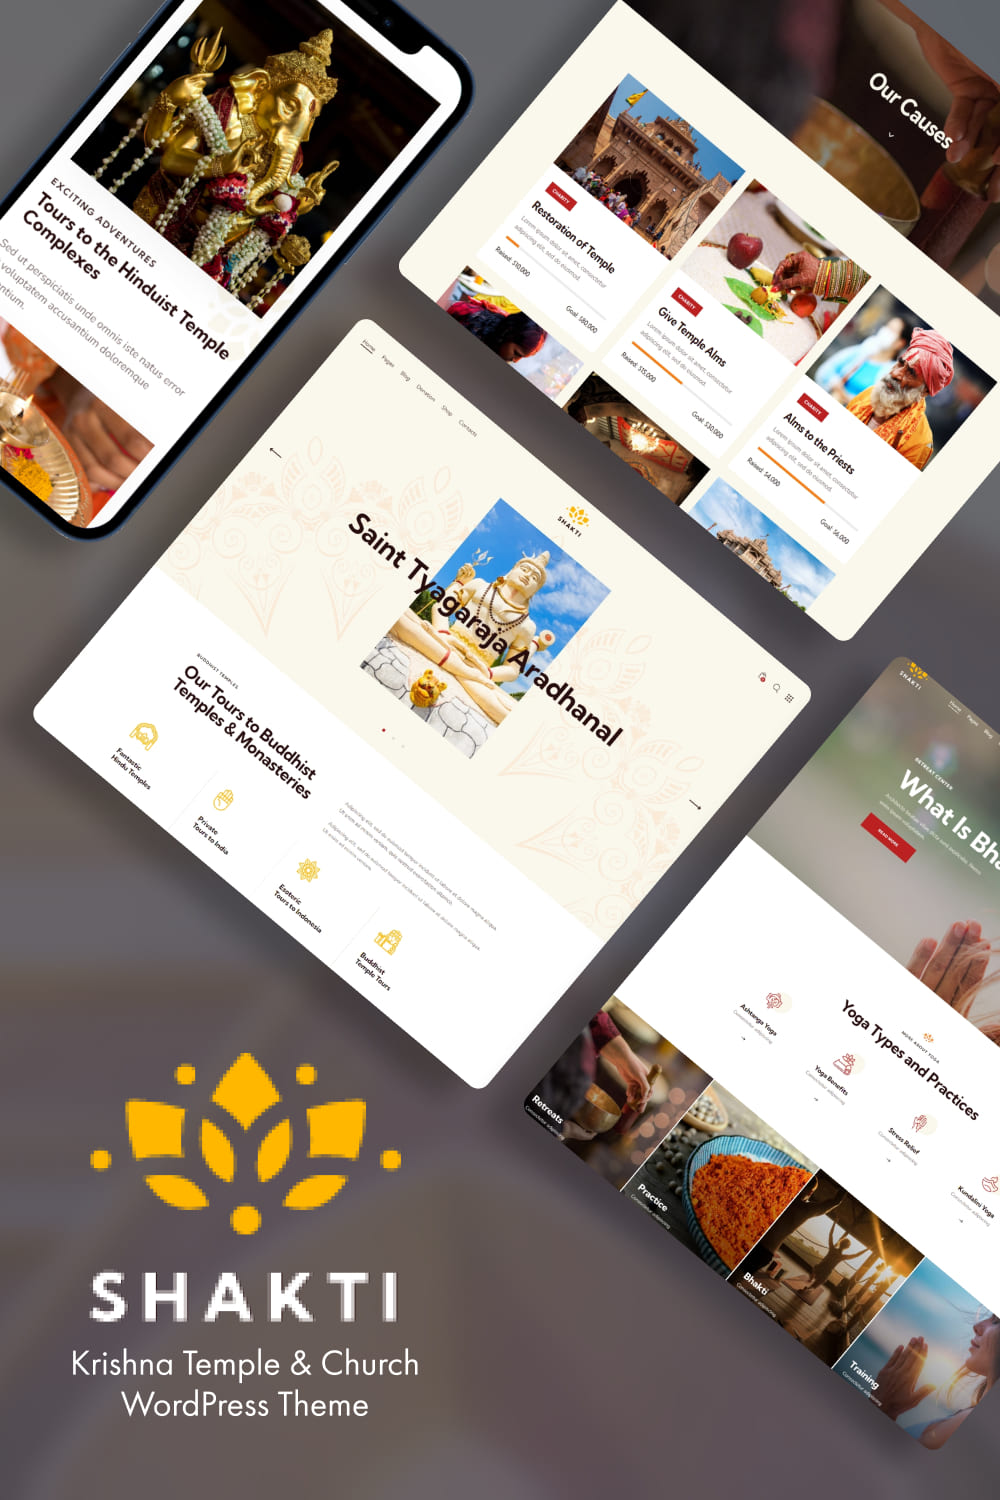 Shakti - Krishna Temple & Church WordPress Theme - Pinterest.